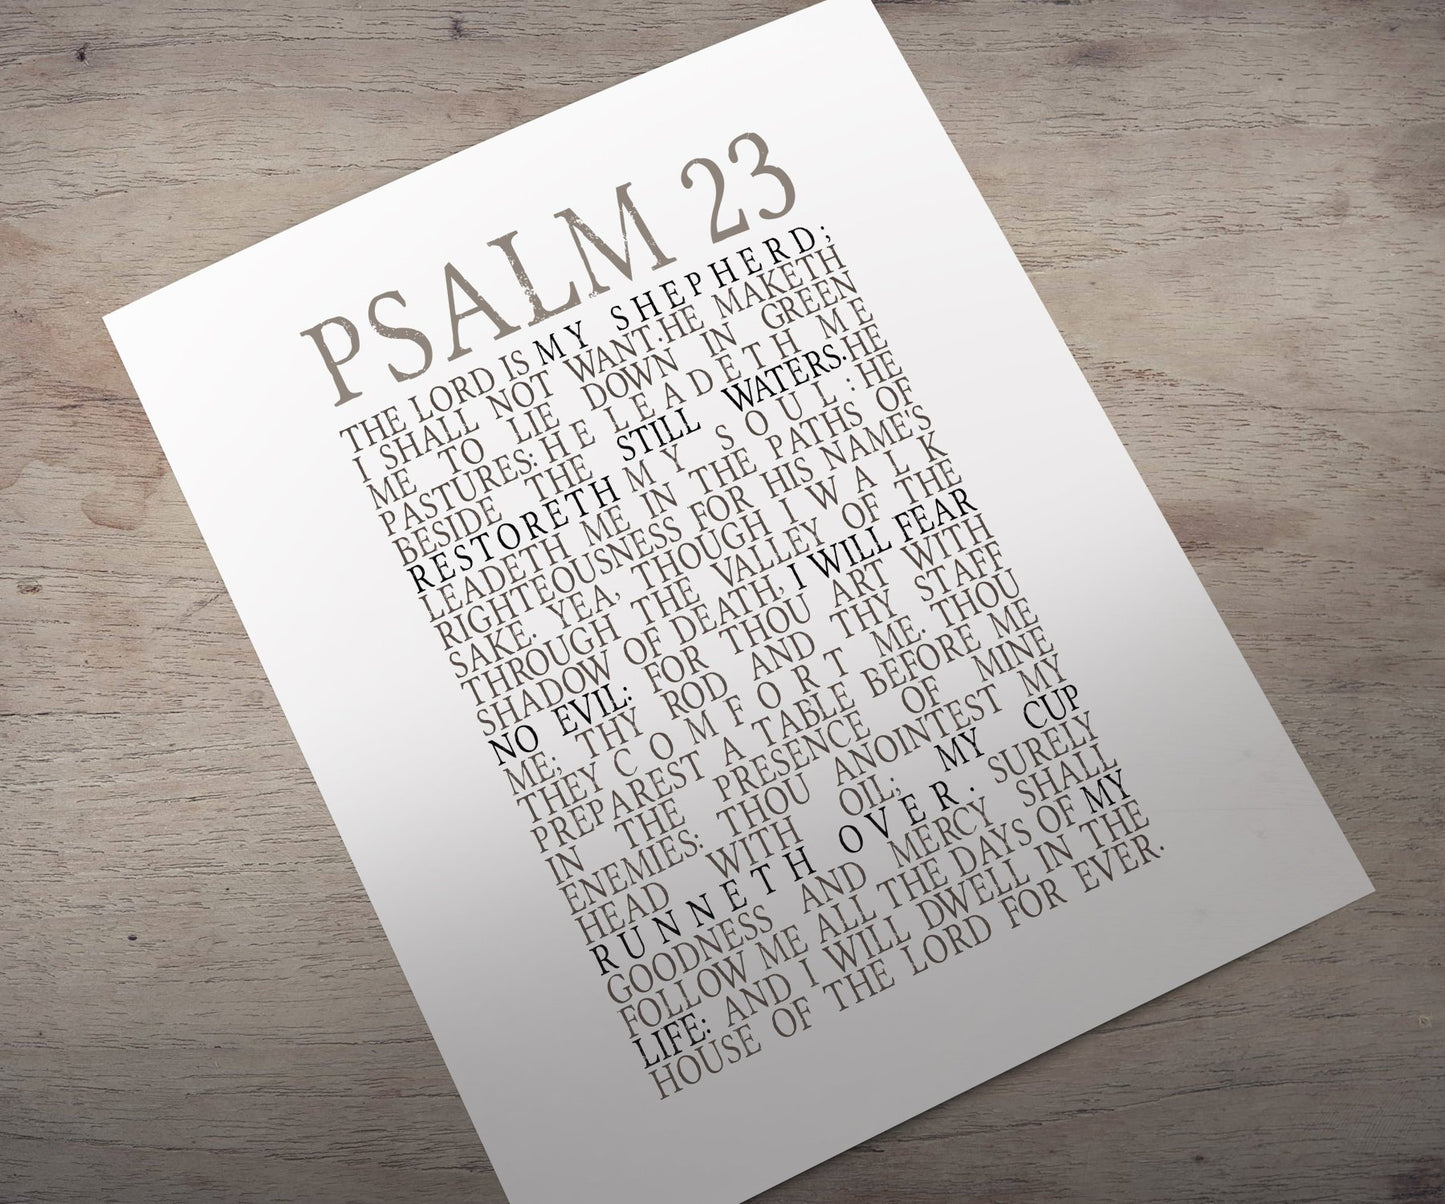 
                  
                    Psalm 23, Framed Scripture Print, Bible Verse Print, The Lord is my Shepherd, christian subway, decor, gift, inspirational, friend, best
                  
                